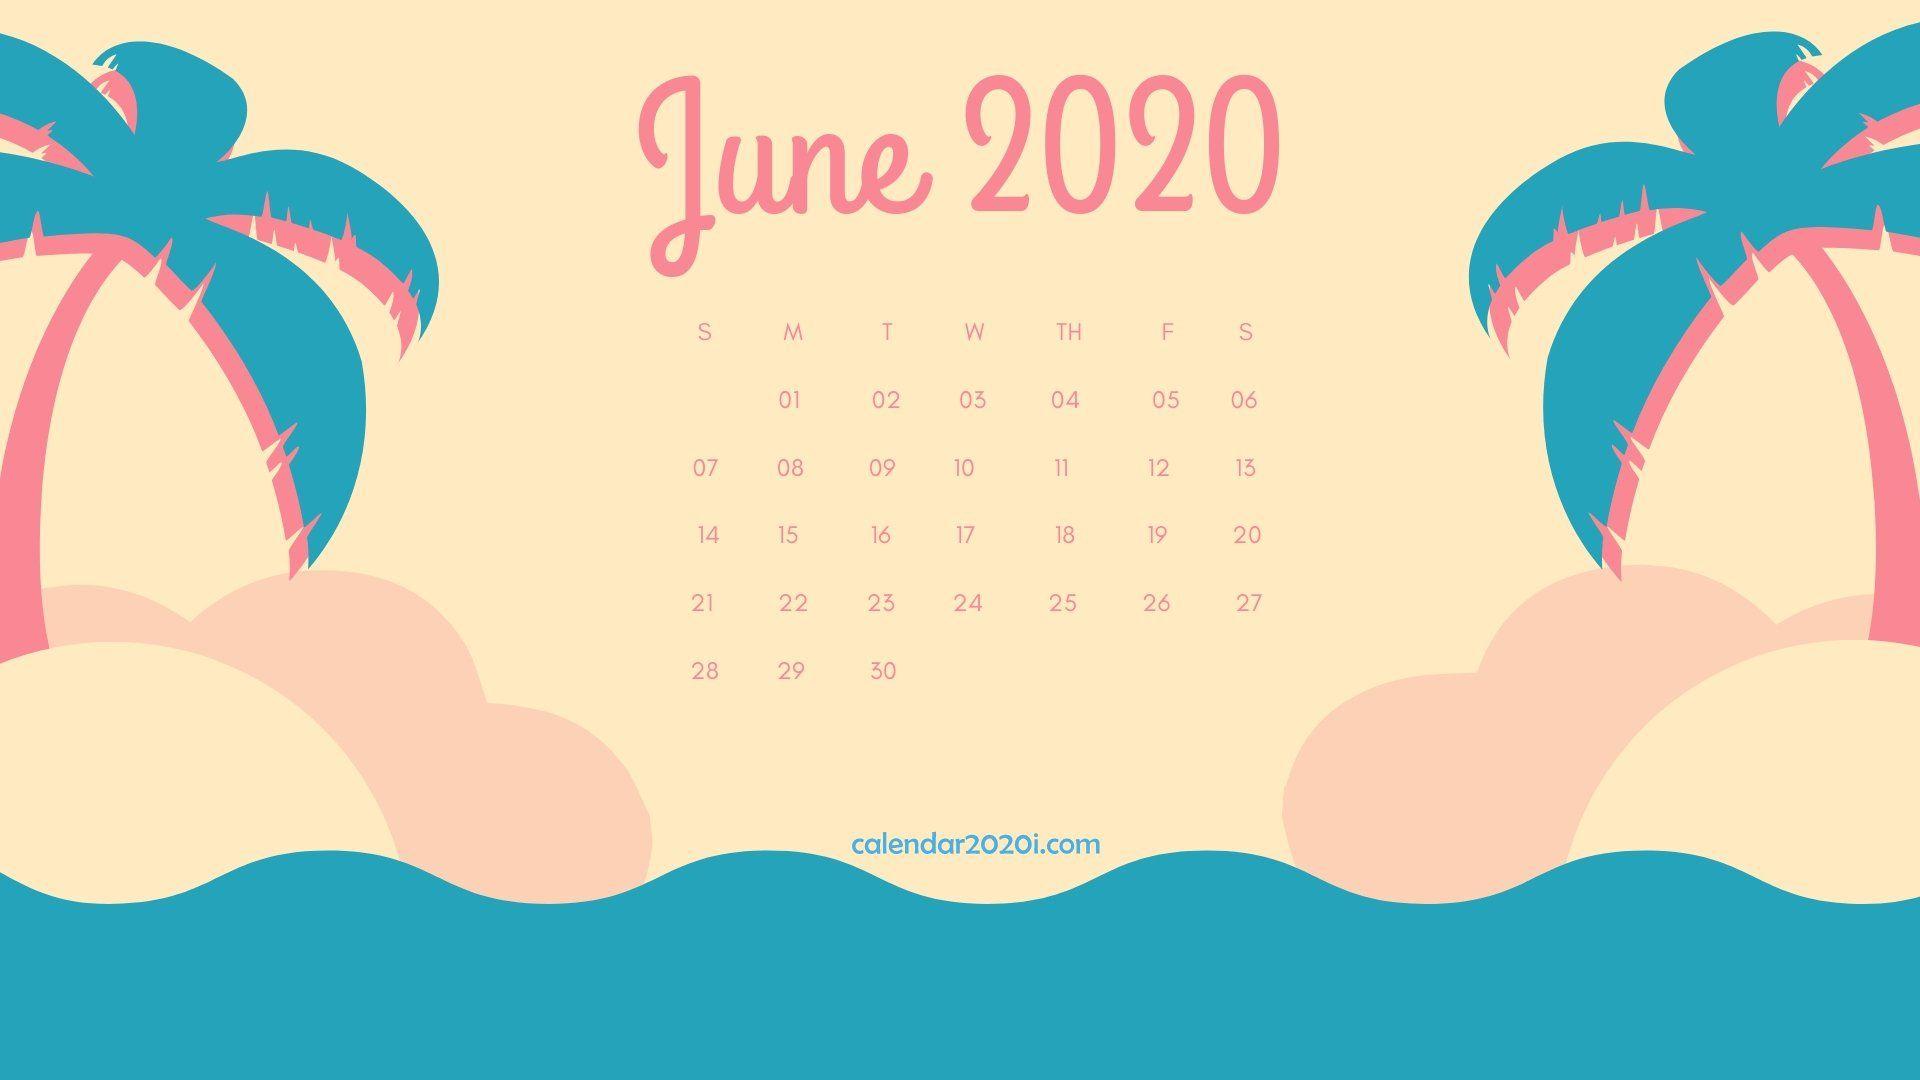 June 2020 Calendar Wallpaper